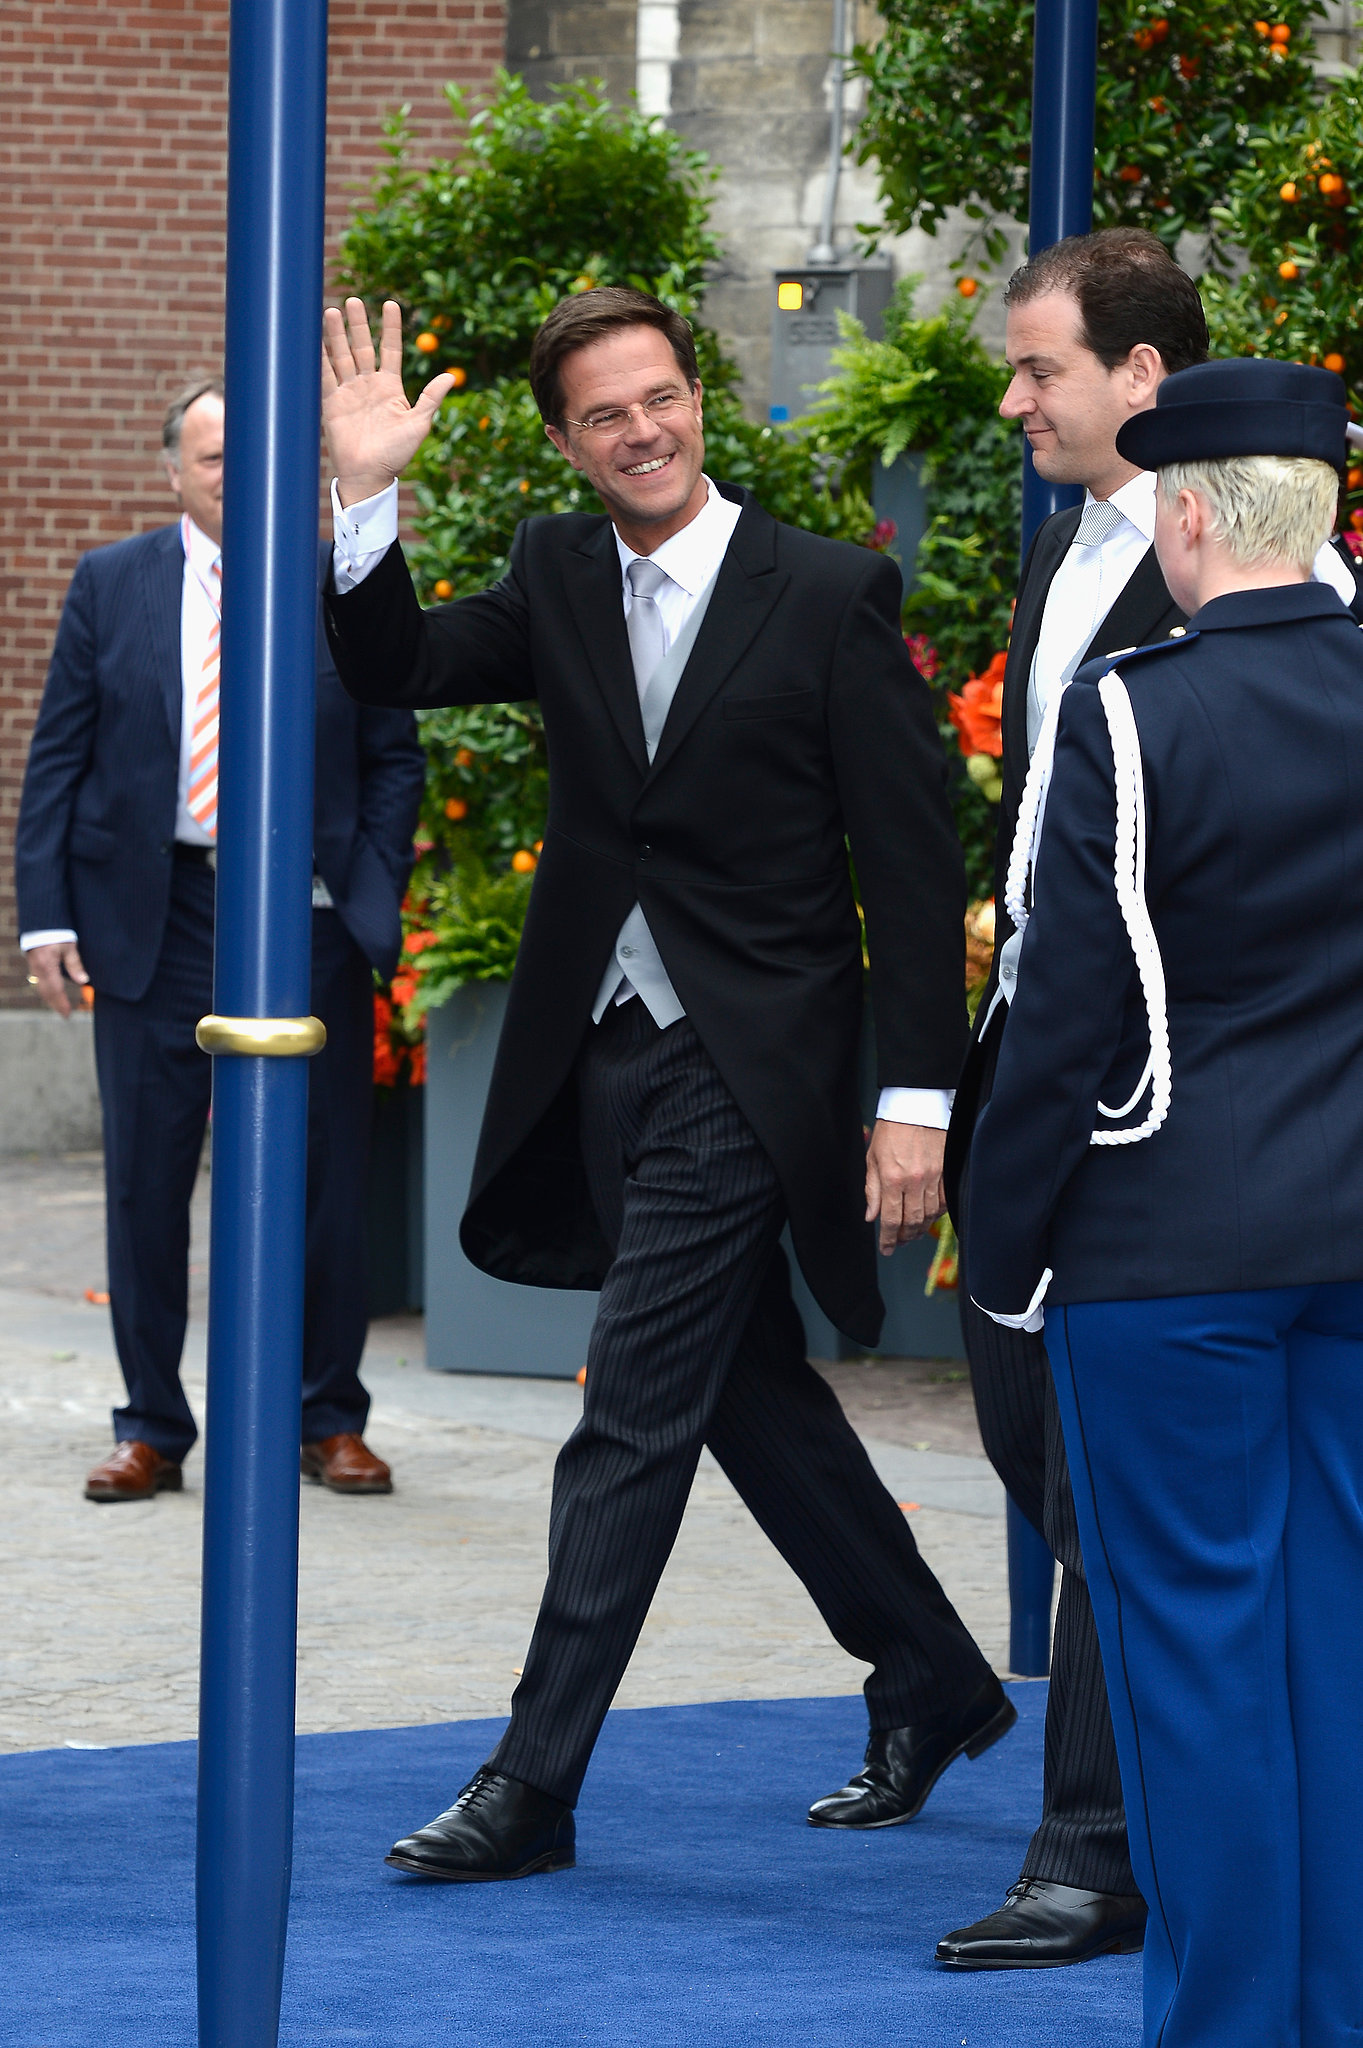 Dutch Prime Minister Mark Rutte waved he left inauguration